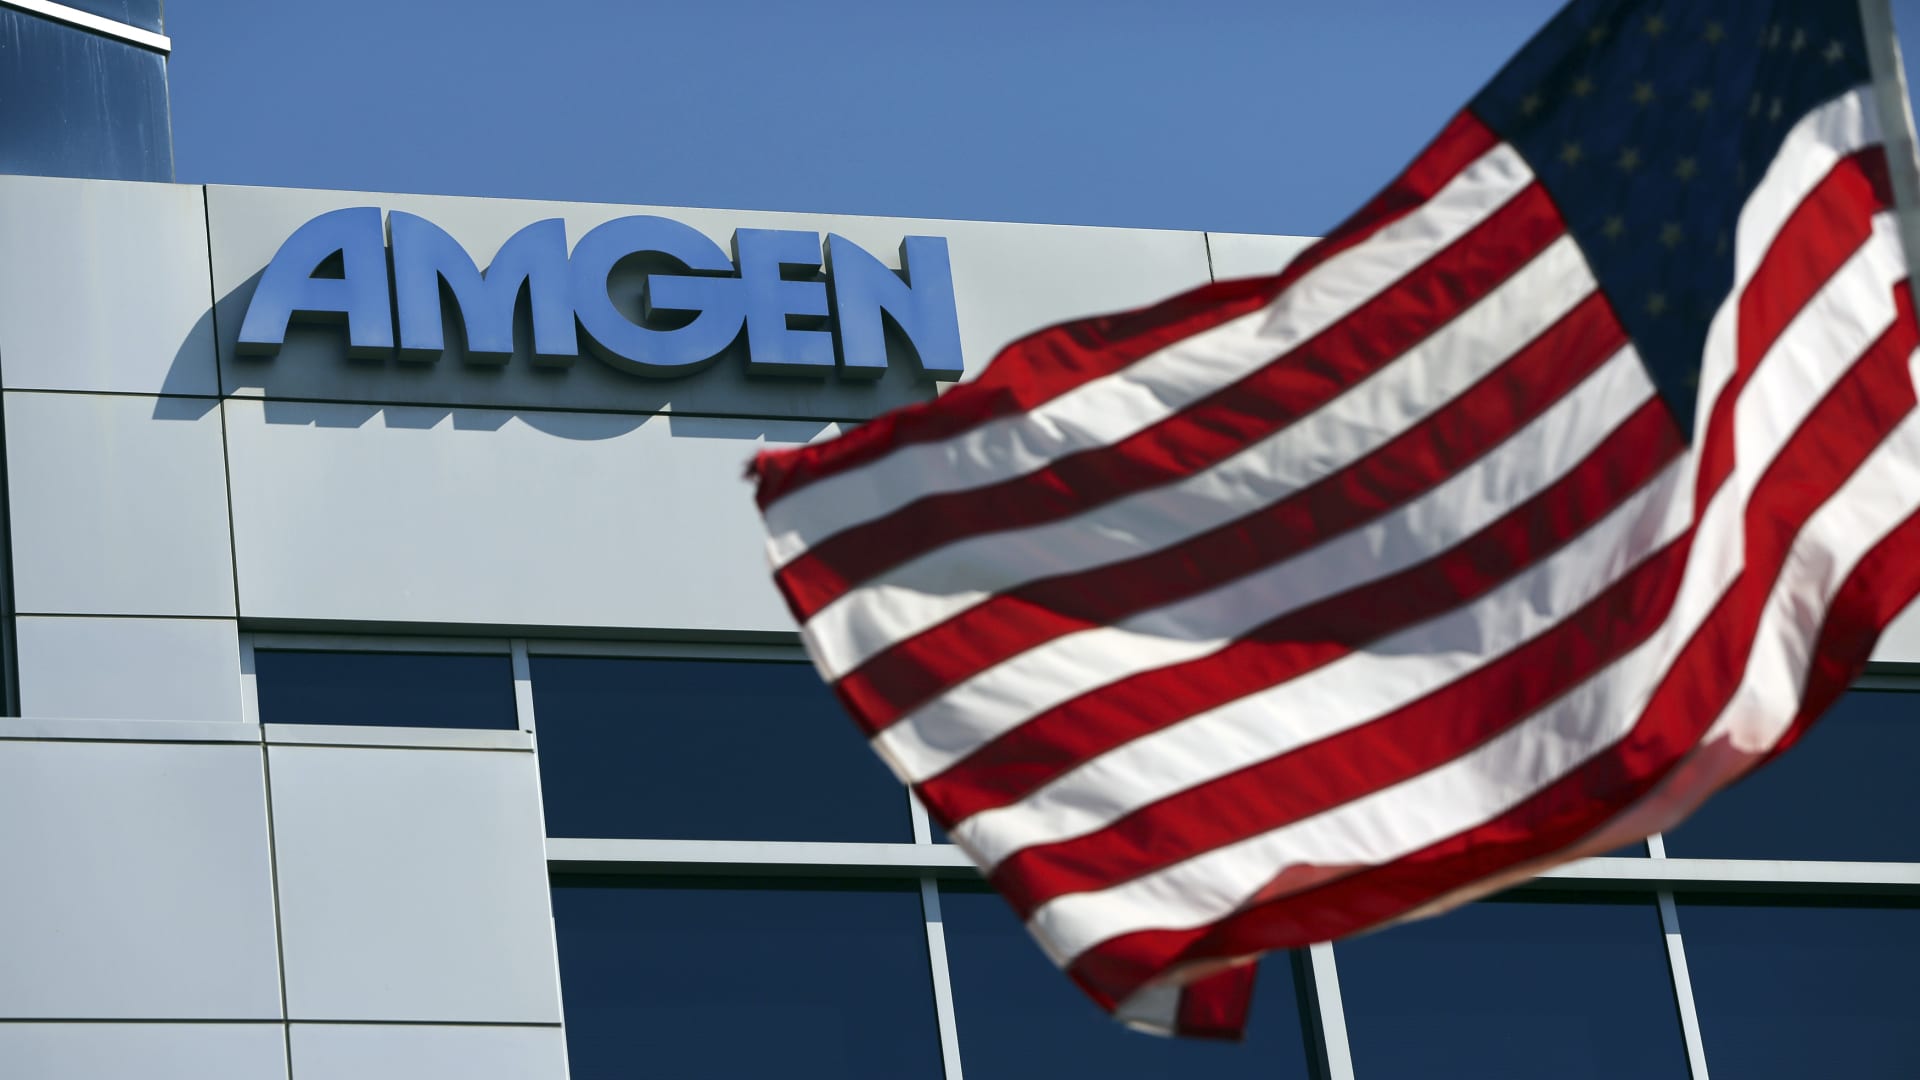 FTC sues to block Amgen acquisition of Horizon Therapeutics